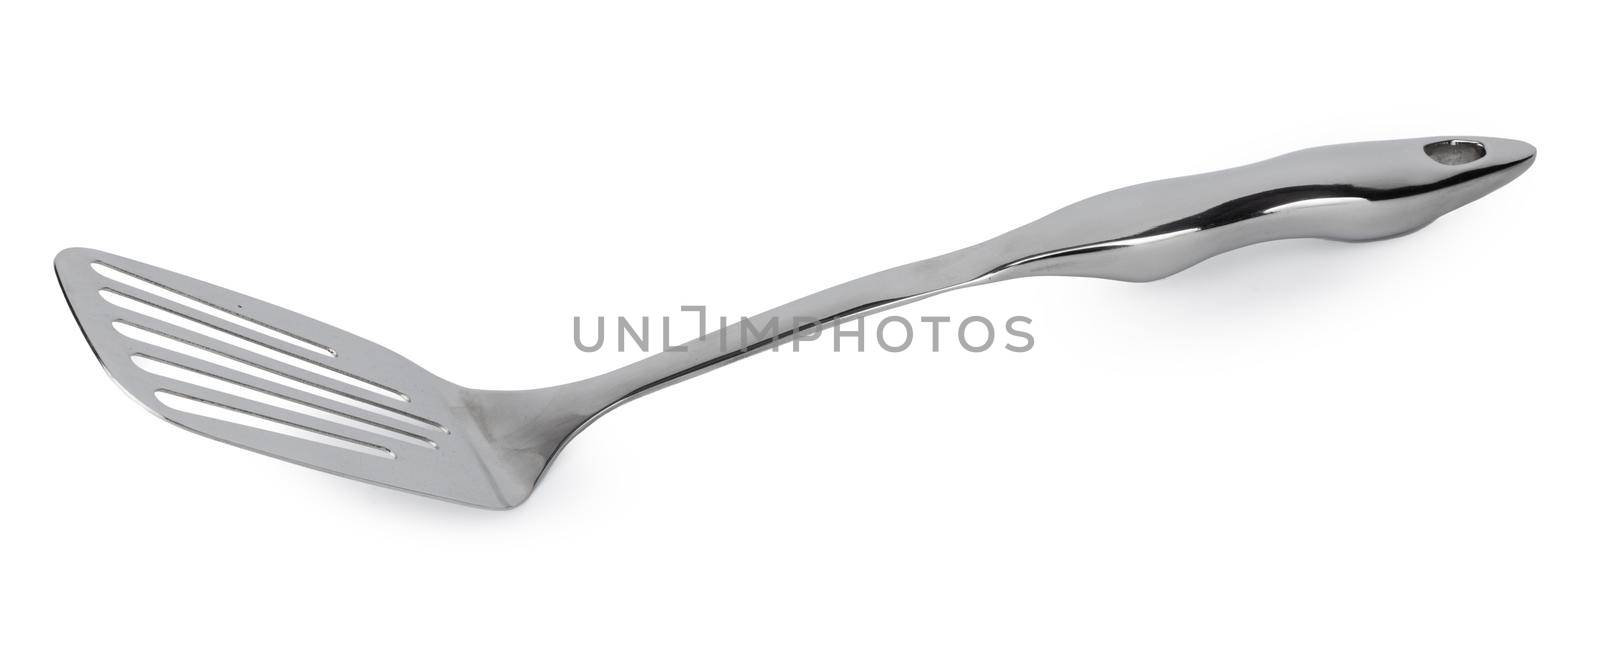 Aluminum new kitchen utensil isolated on white background